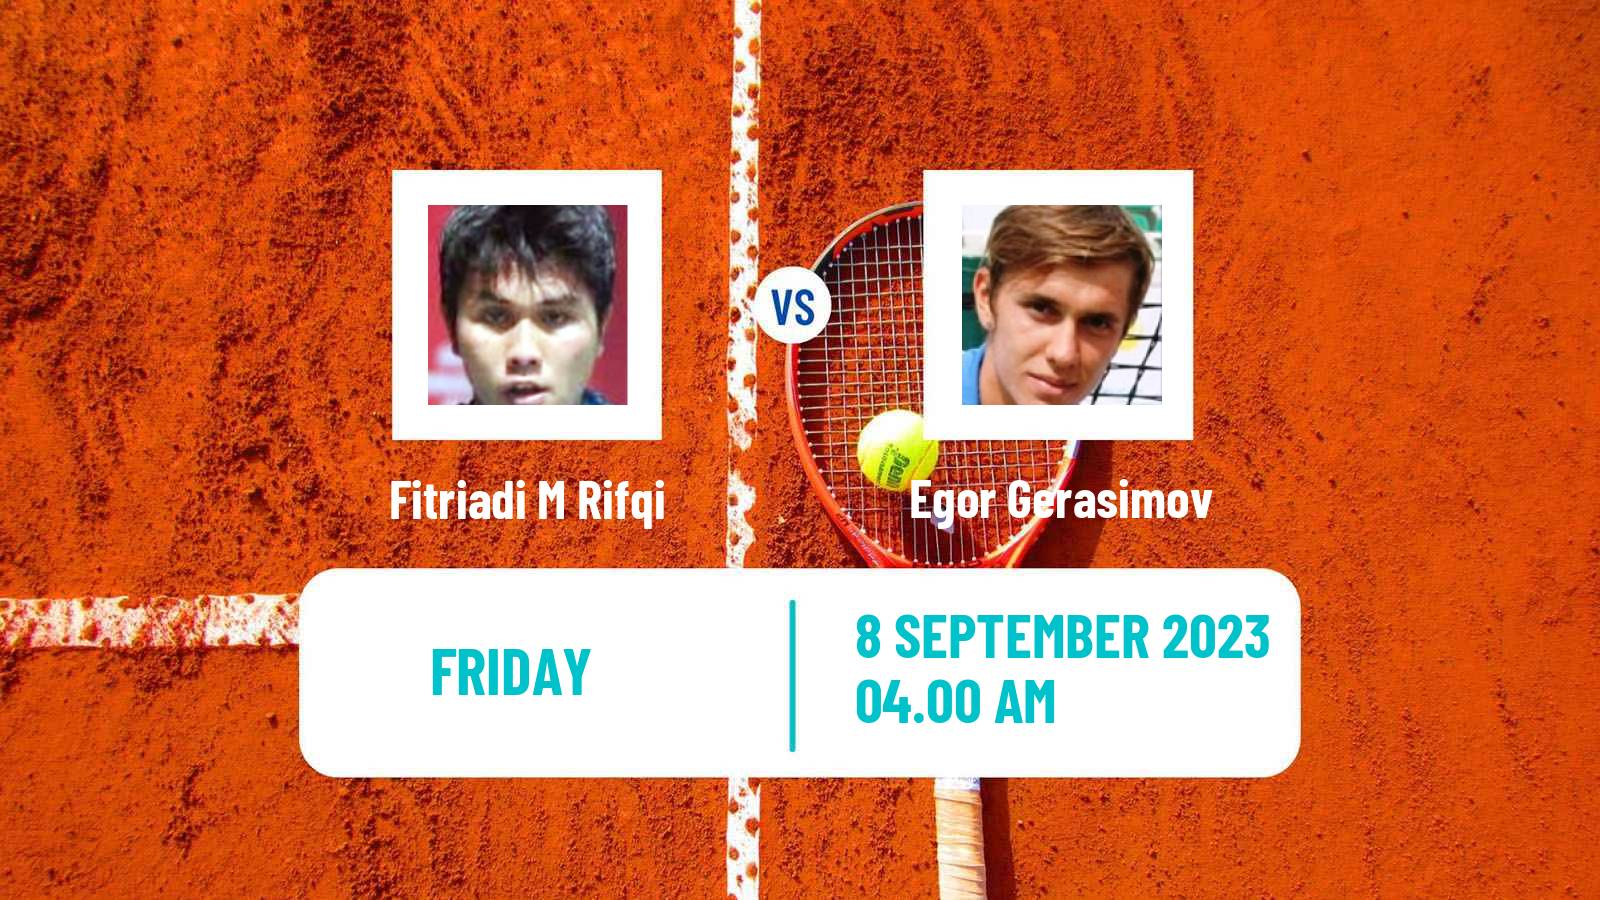 Tennis ITF M25 Hong Kong 2 Men M Rifqi Fitriadi - Egor Gerasimov